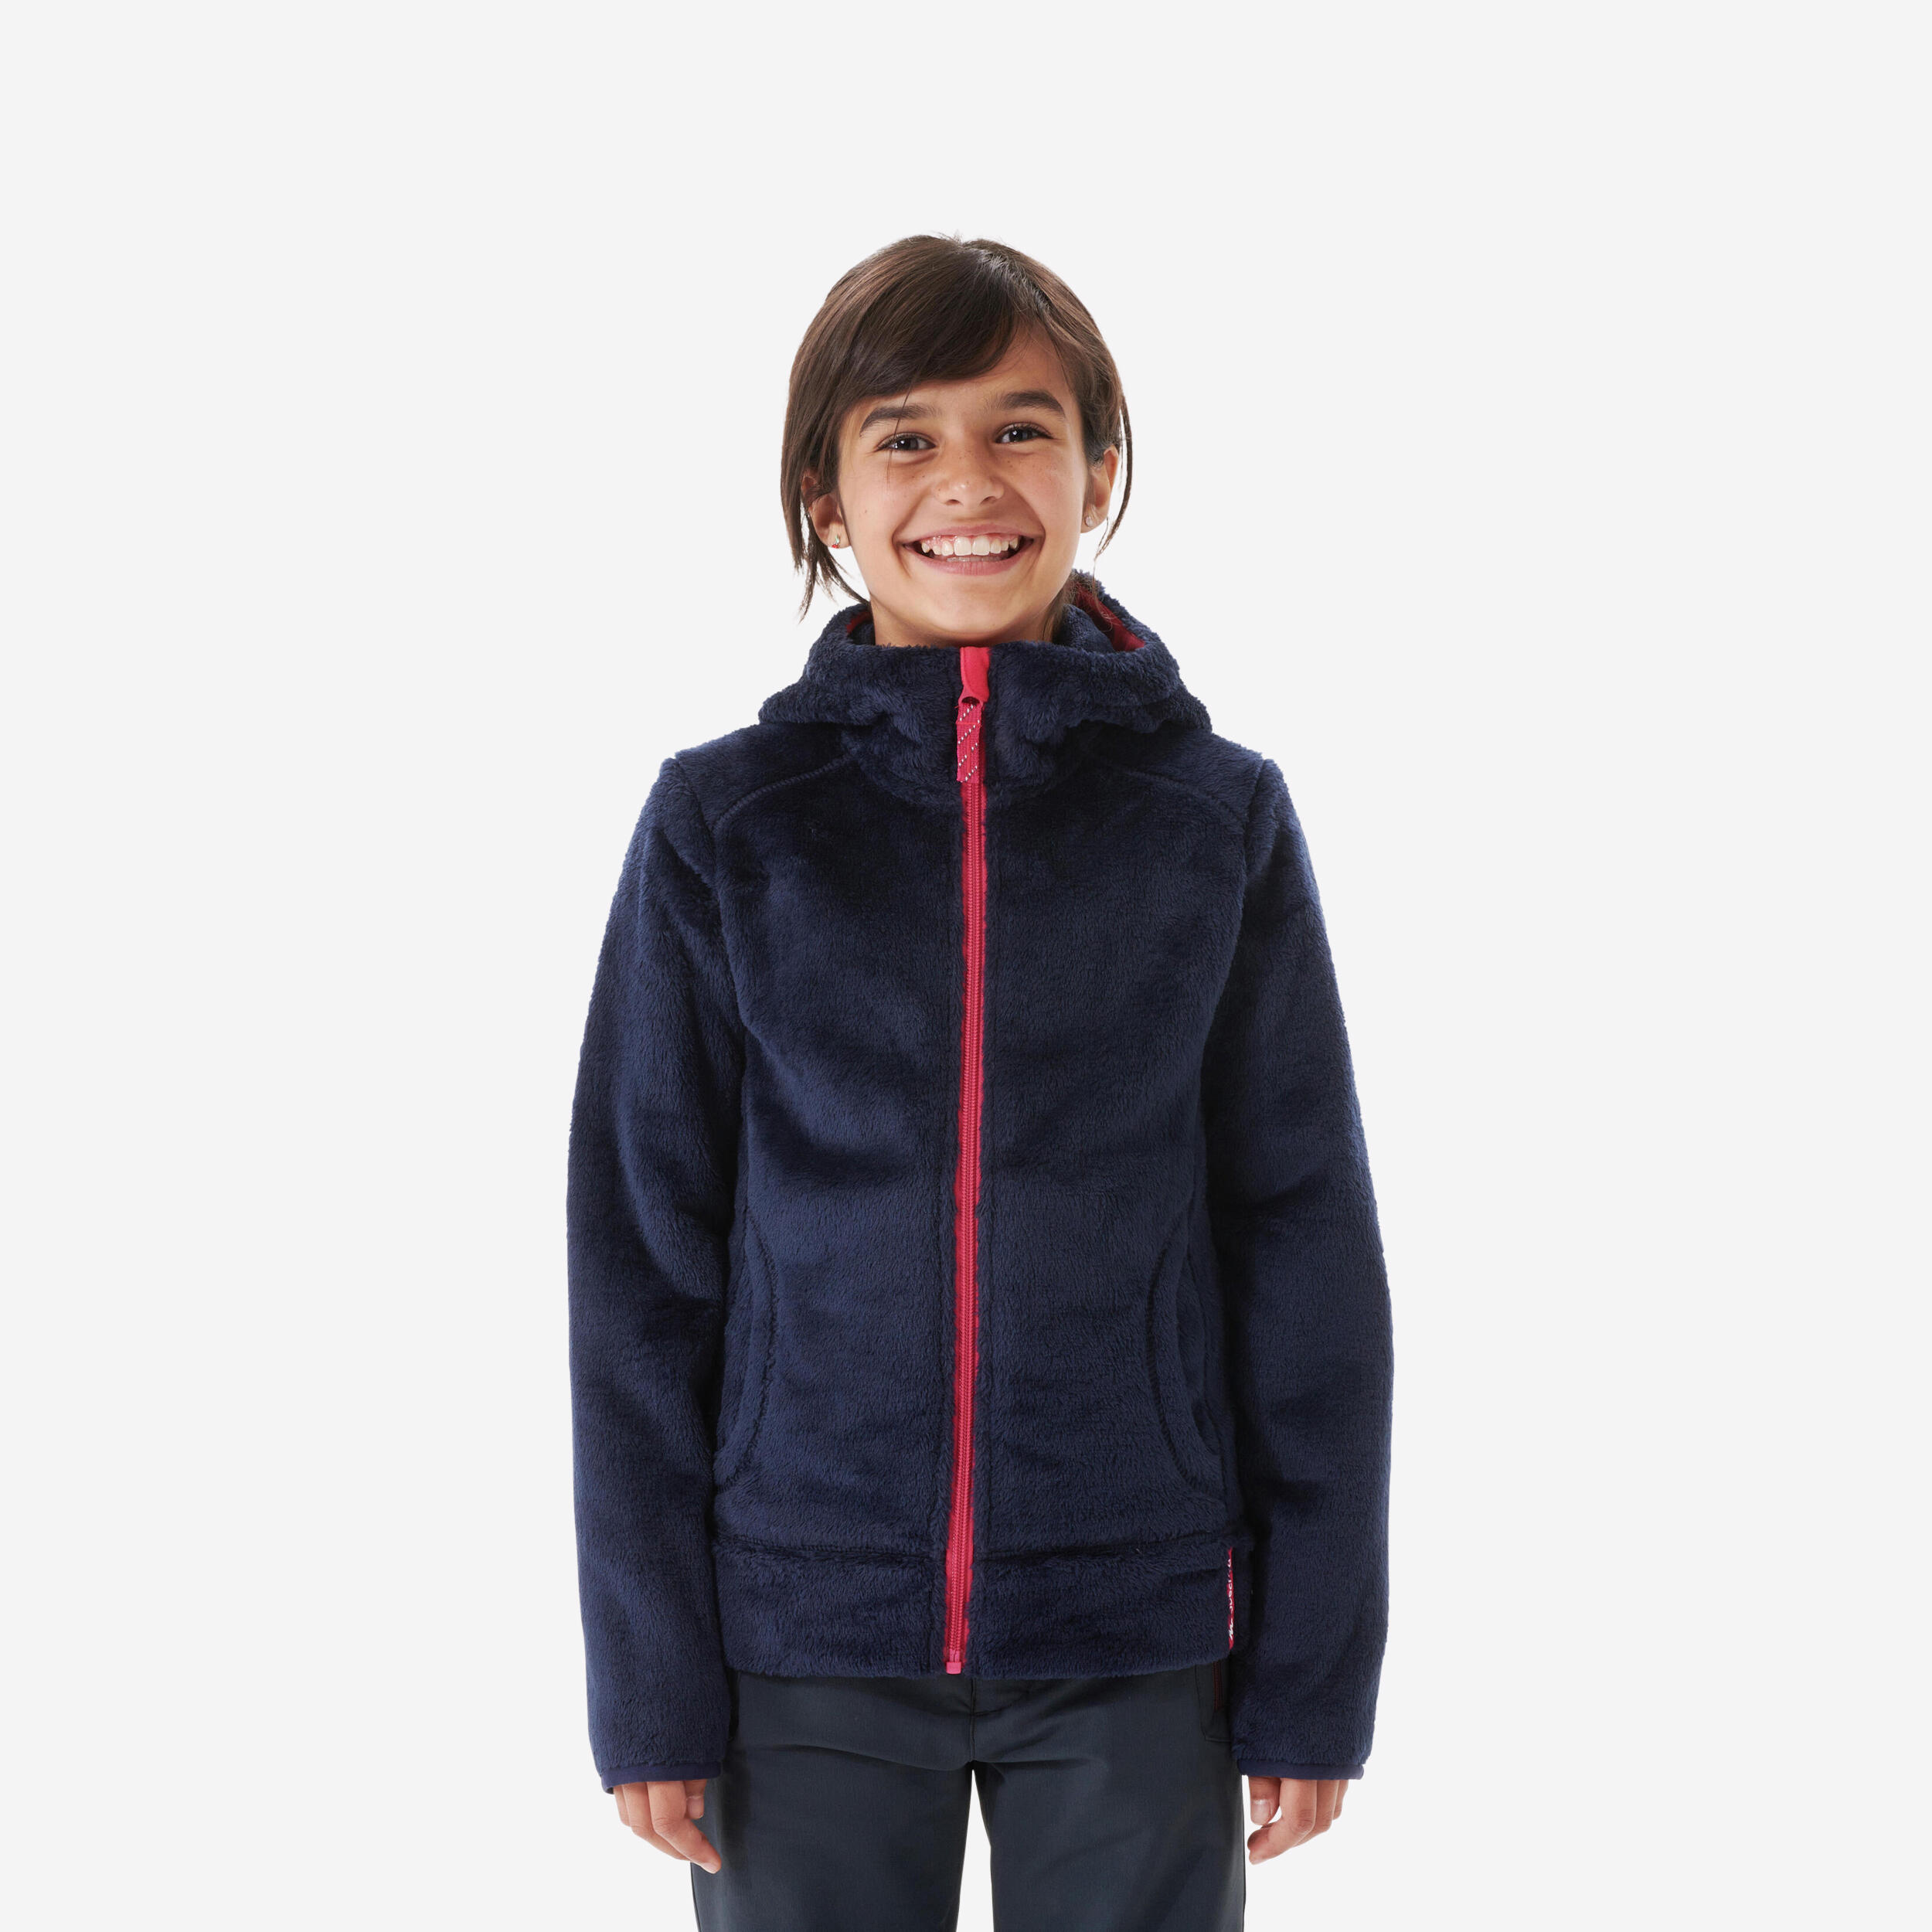 Kids’ Warm Hiking Fleece Jacket - MH500 Aged 7-15 - Navy Blue 1/11